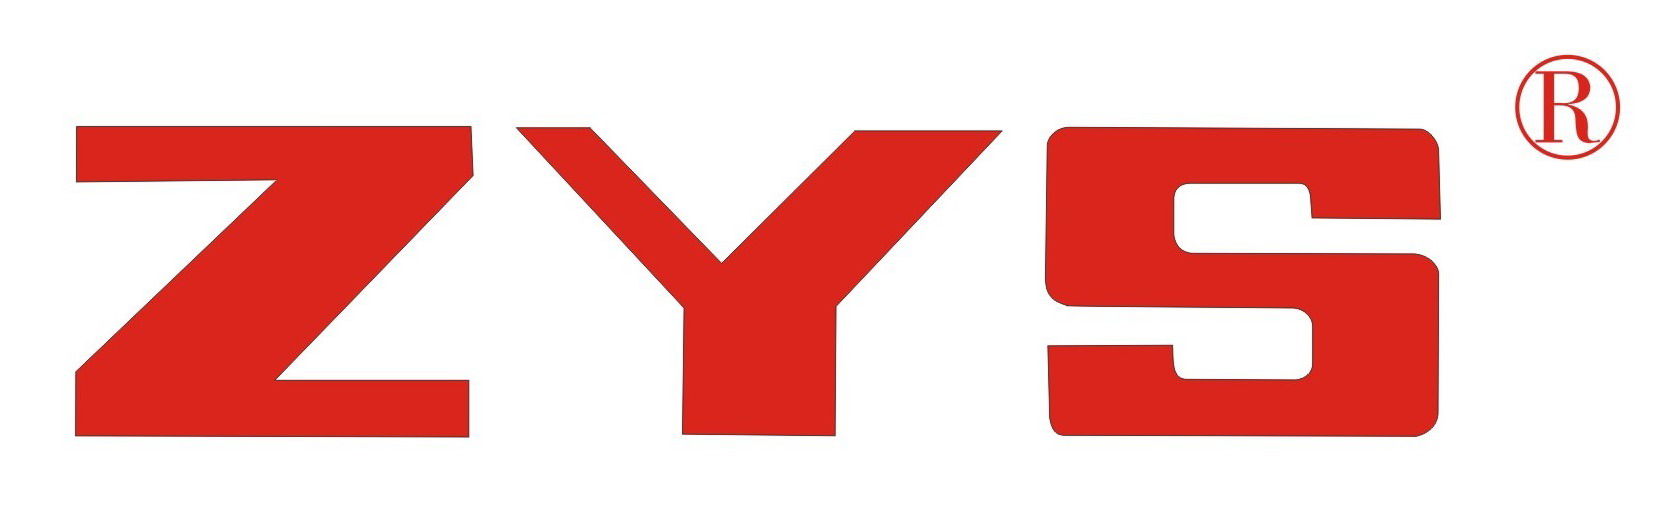 brand logo 8